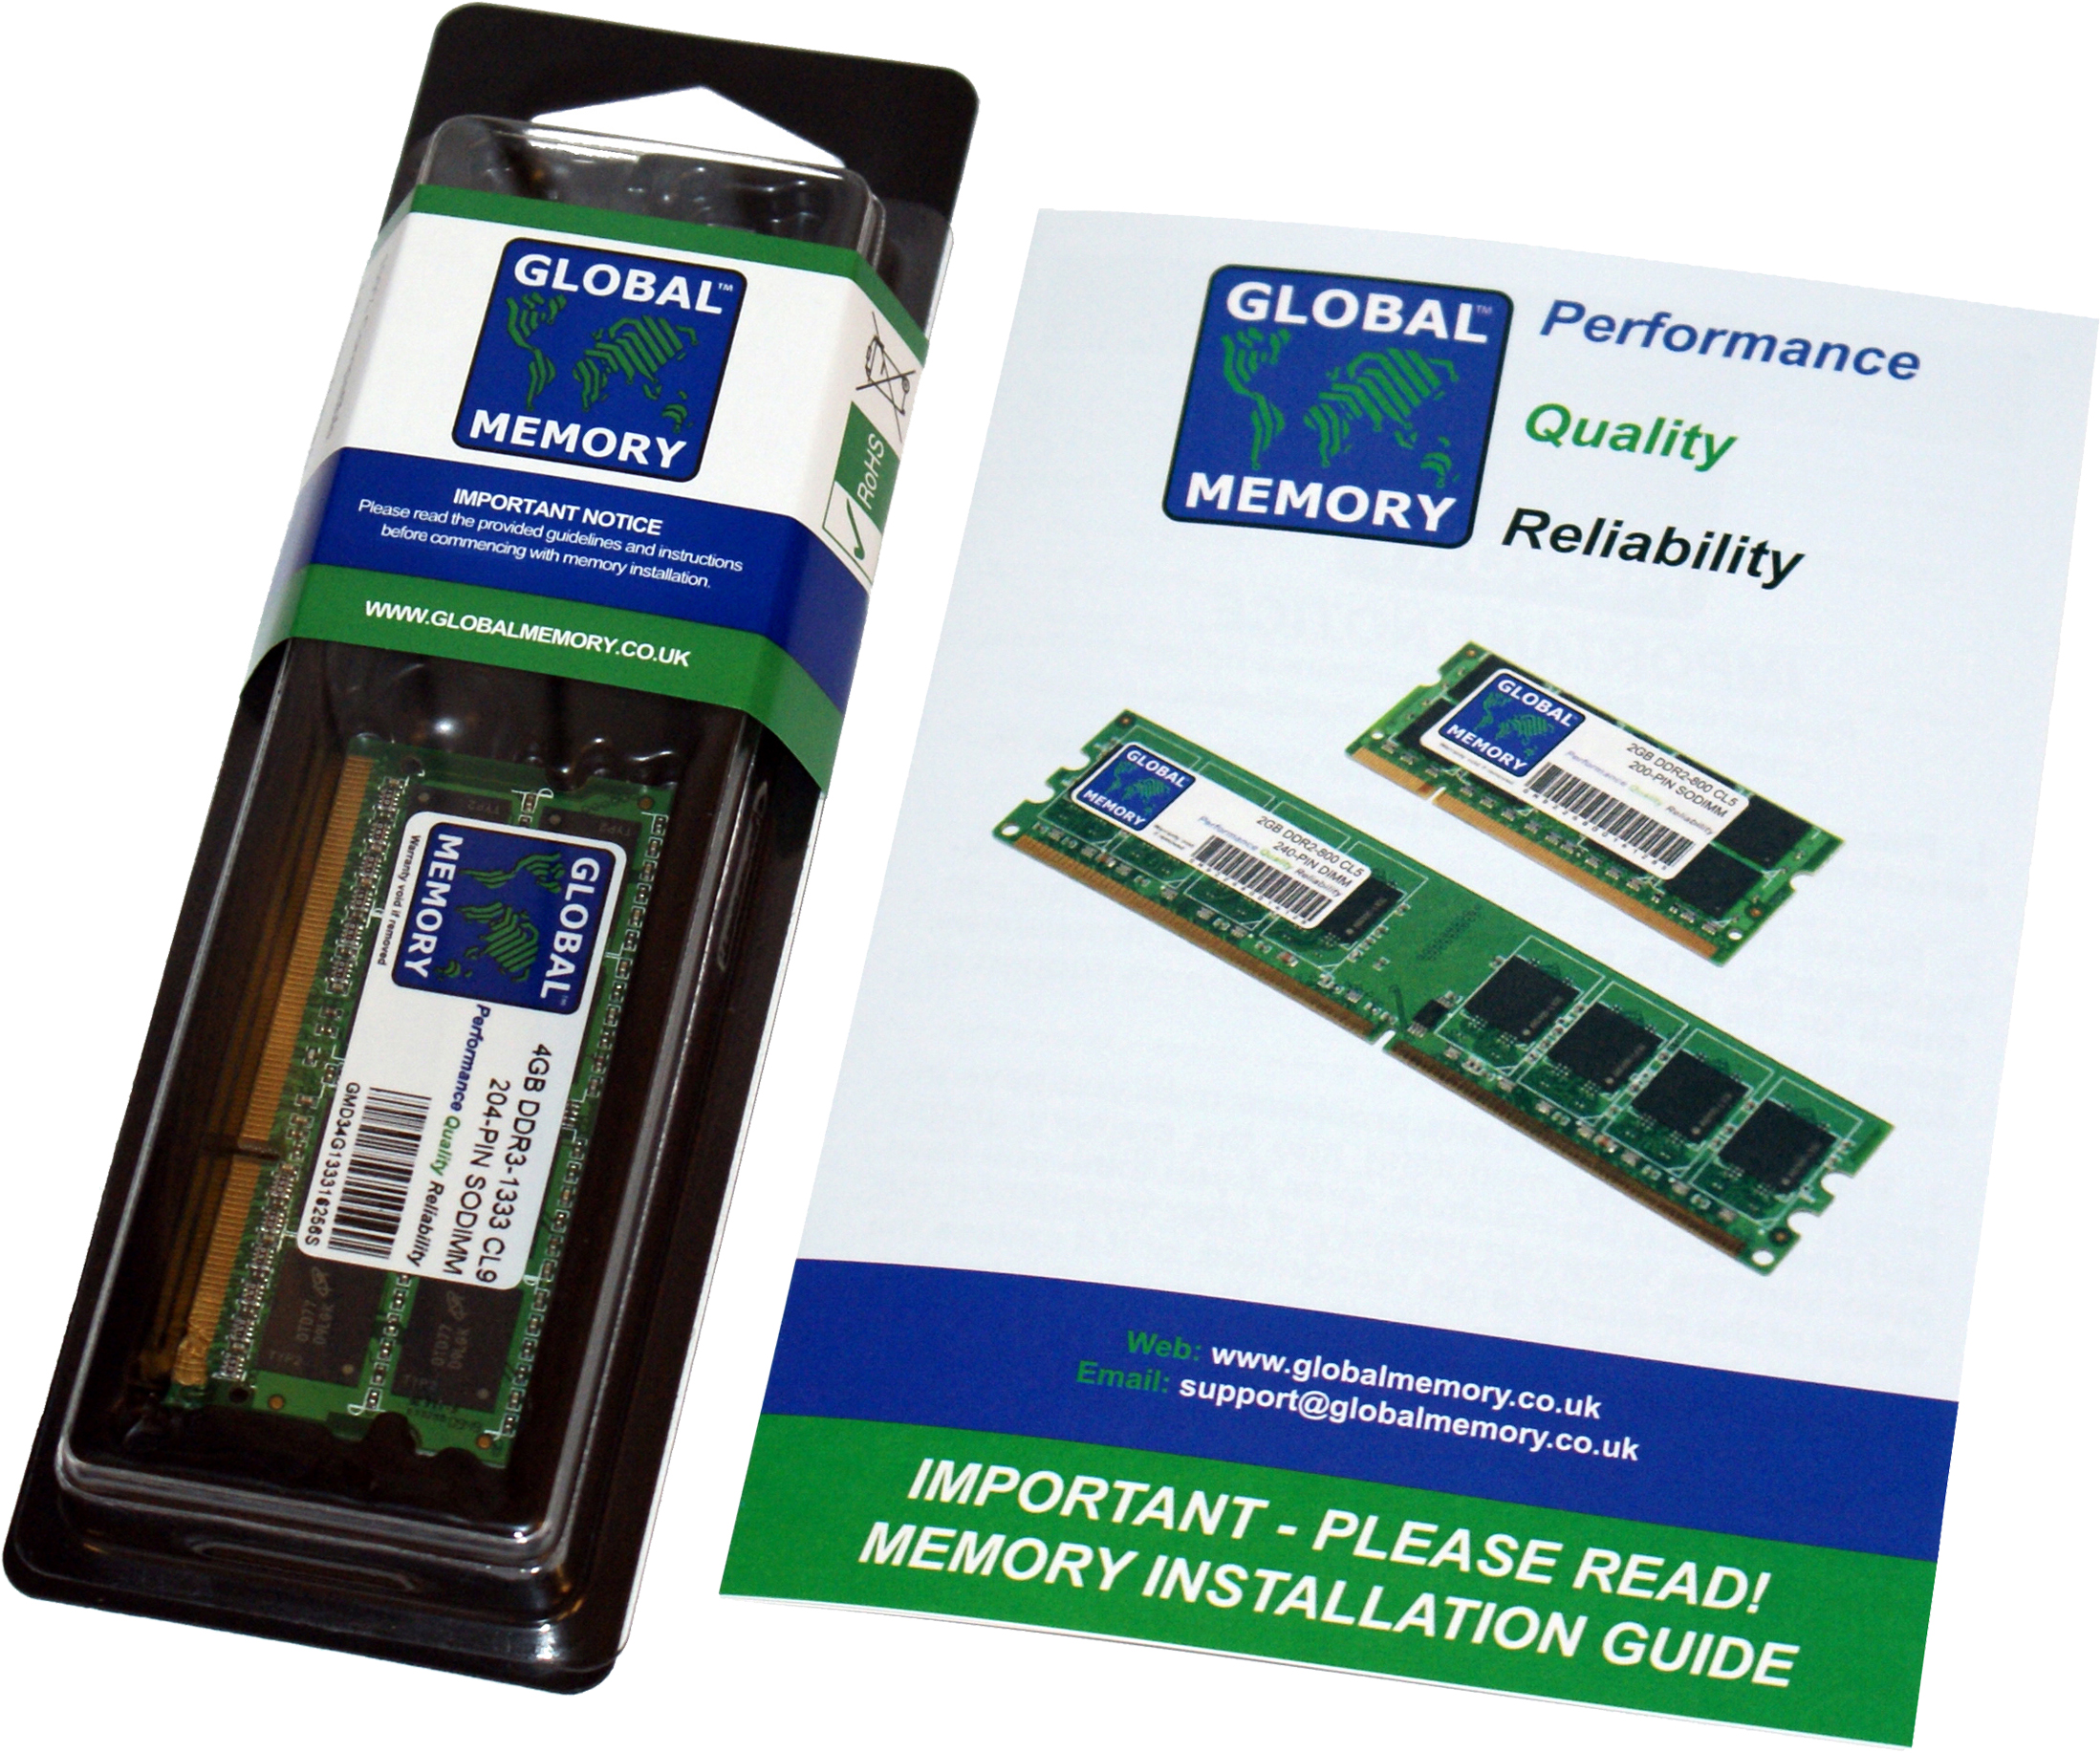 16GB DDR4 2666MHz PC4-21300 260-PIN SODIMM MEMORY RAM FOR FUJITSU LAPTOPS/NOTEBOOKS